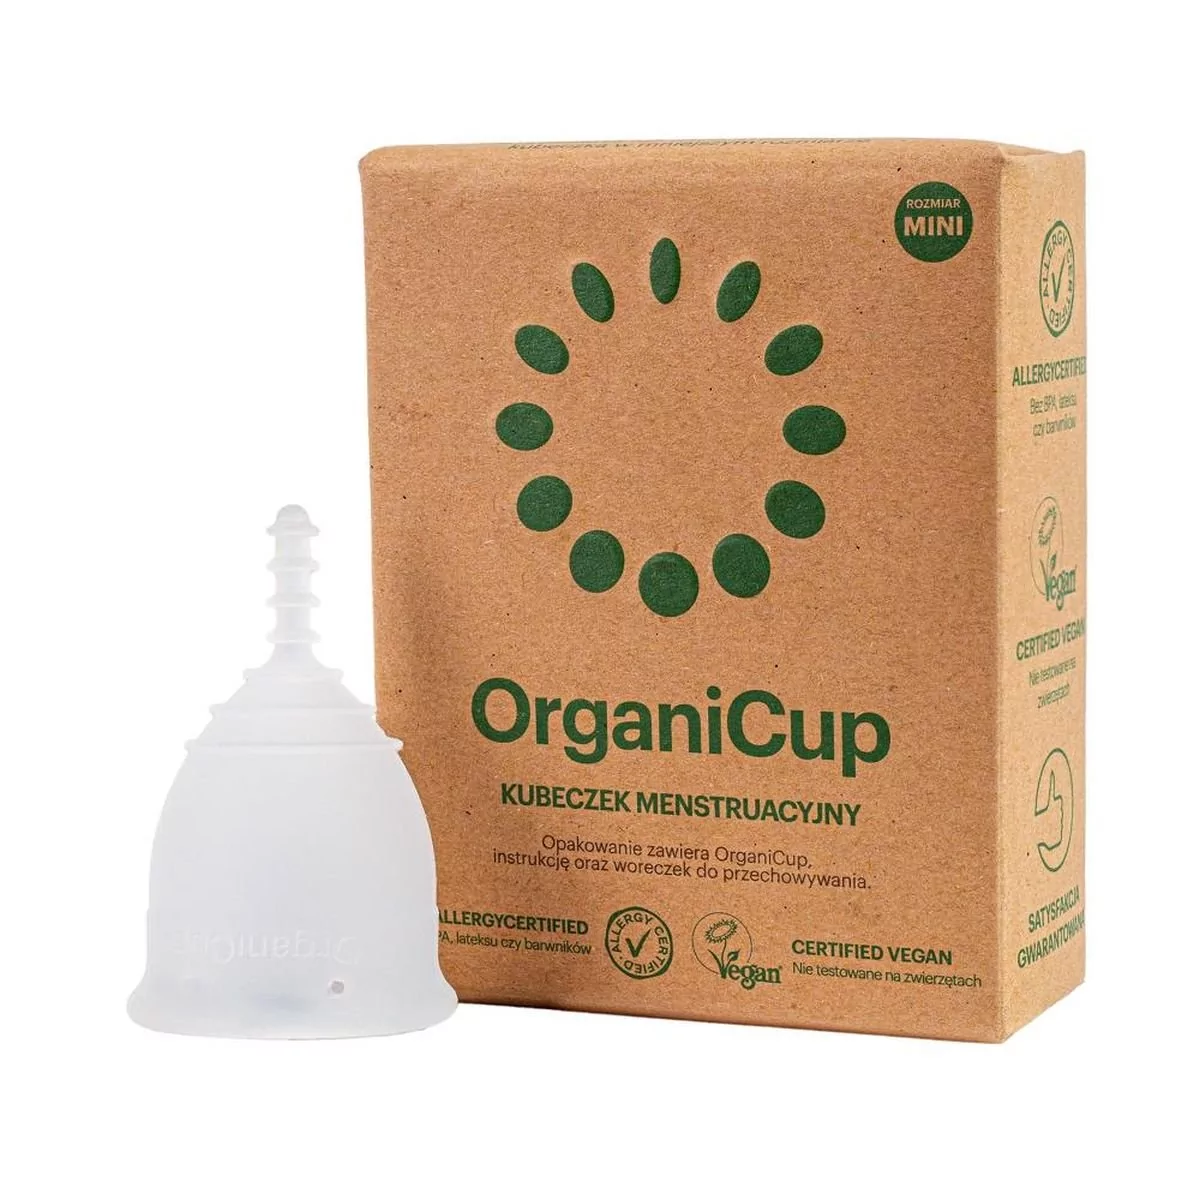 OrganiCup OrganiCup Menstrual Cup kubeczek menstruacyjny Size Mini